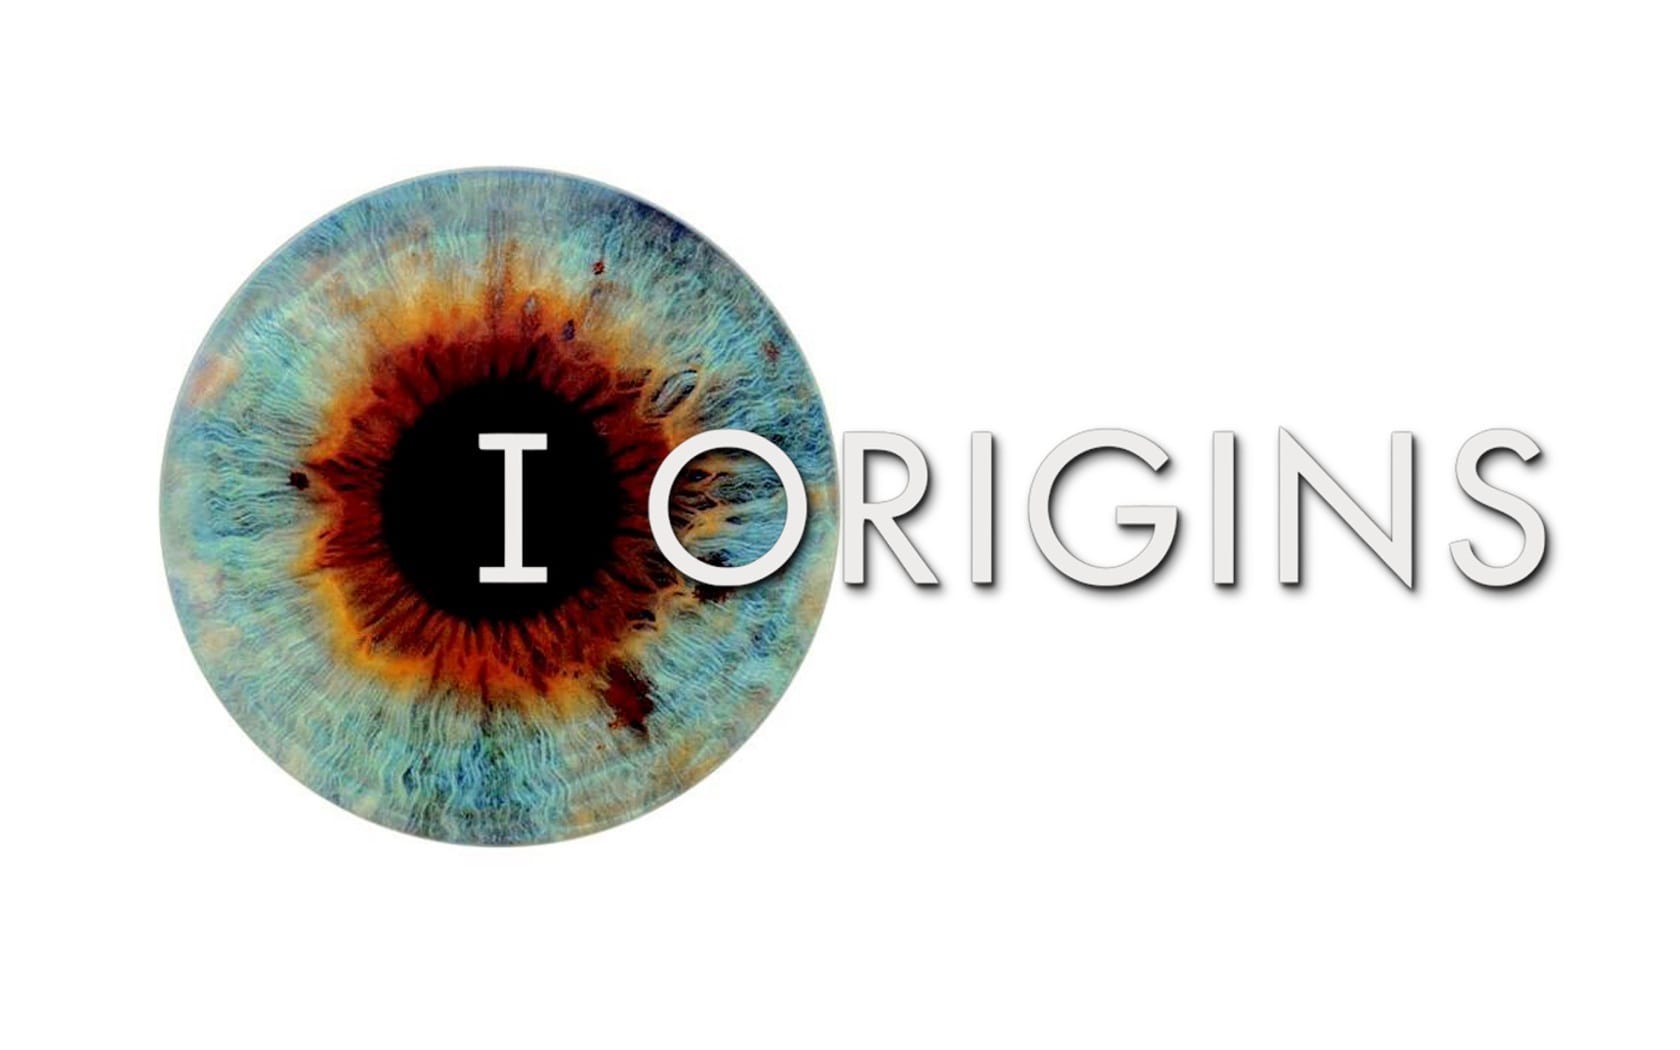 Origin first. I Origins. Origins для глаз. I_Origins модель. Origin ме.